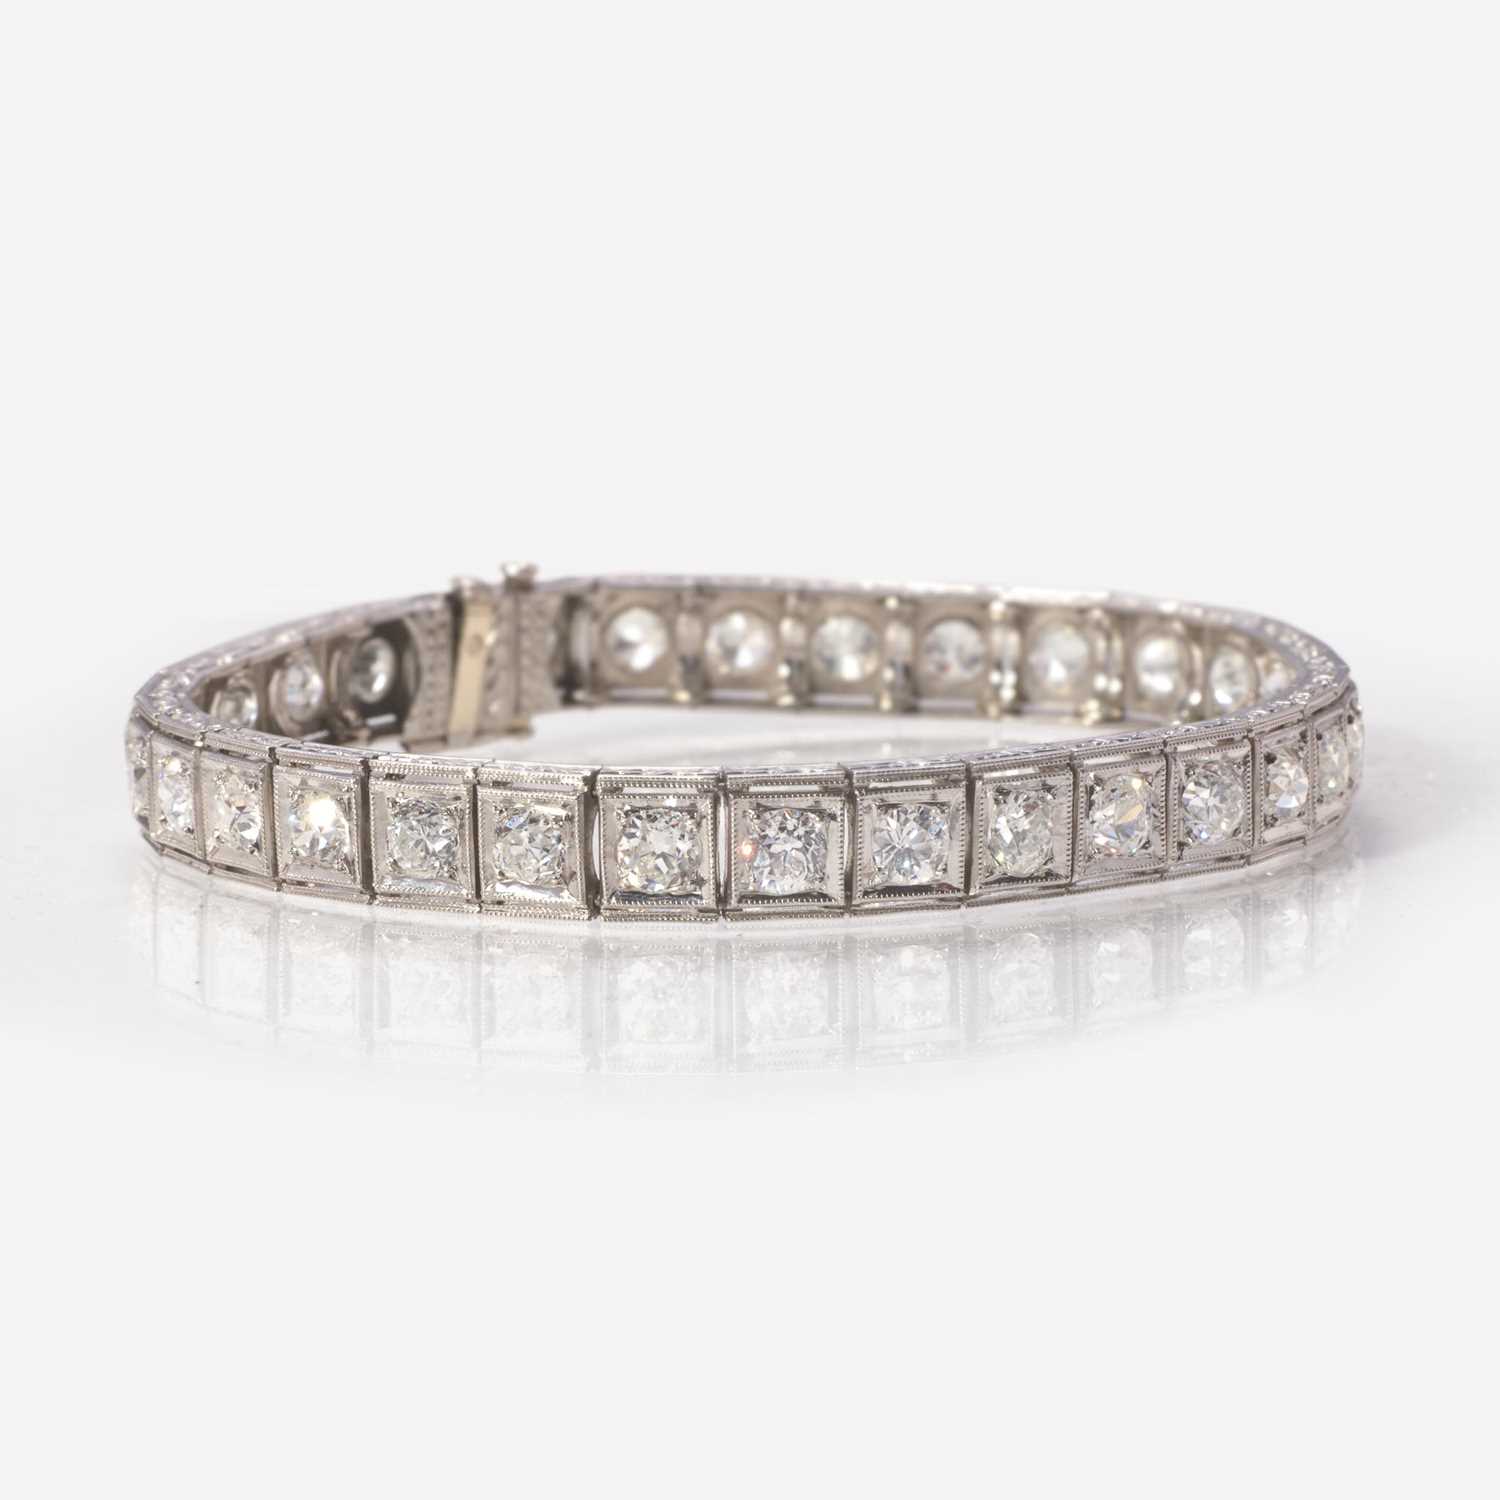 Lot 2 - A Platinum and Diamond Line Bracelet